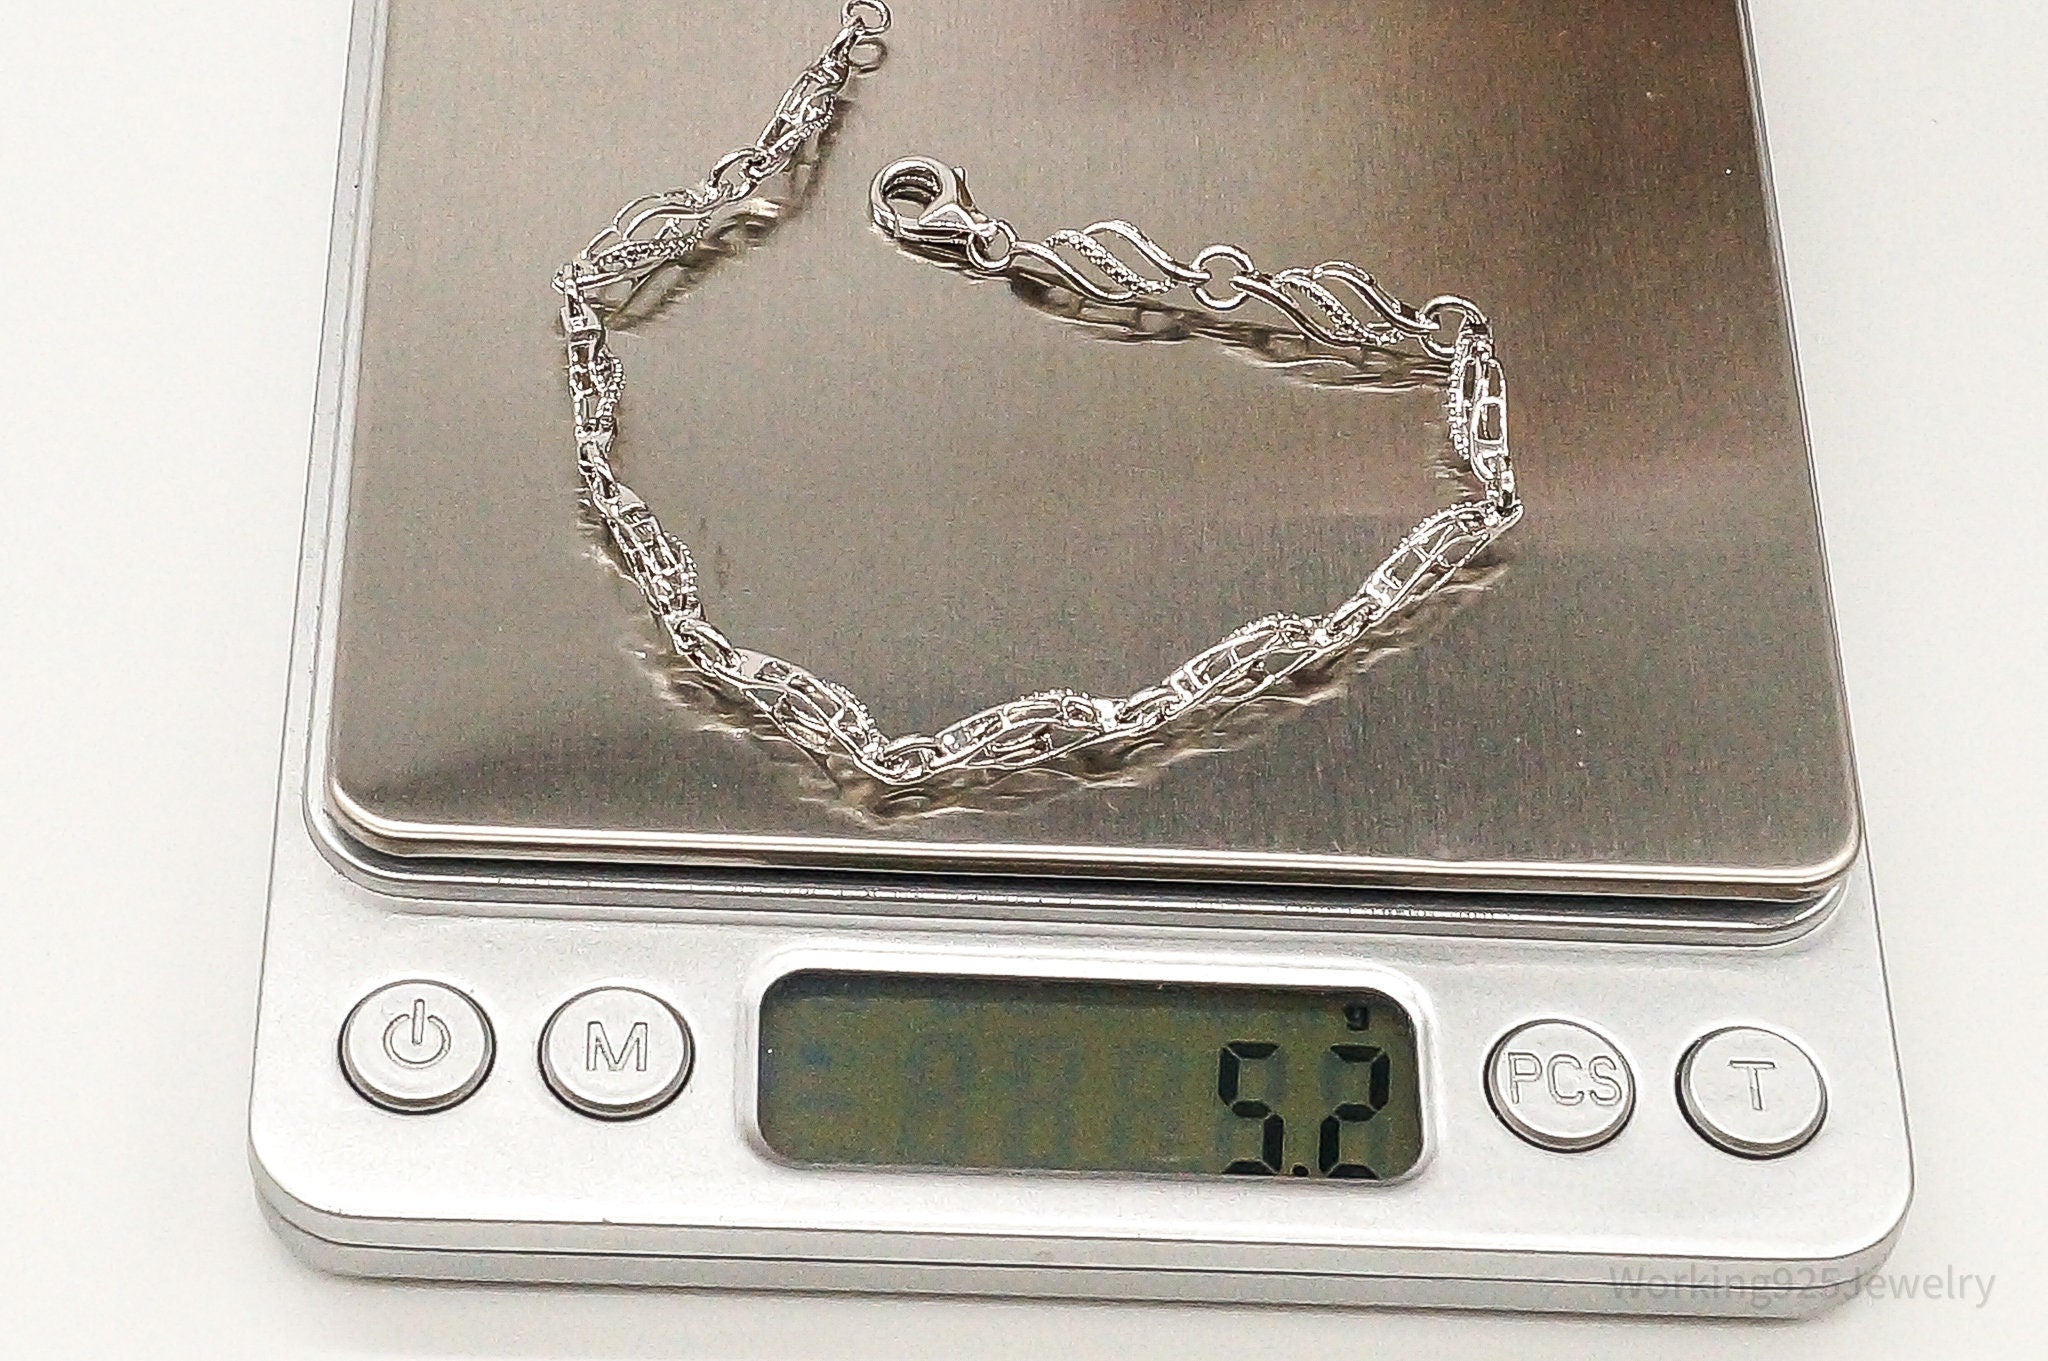 Designer JWBR Single Diamond Linked Sterling Silver Bracelet